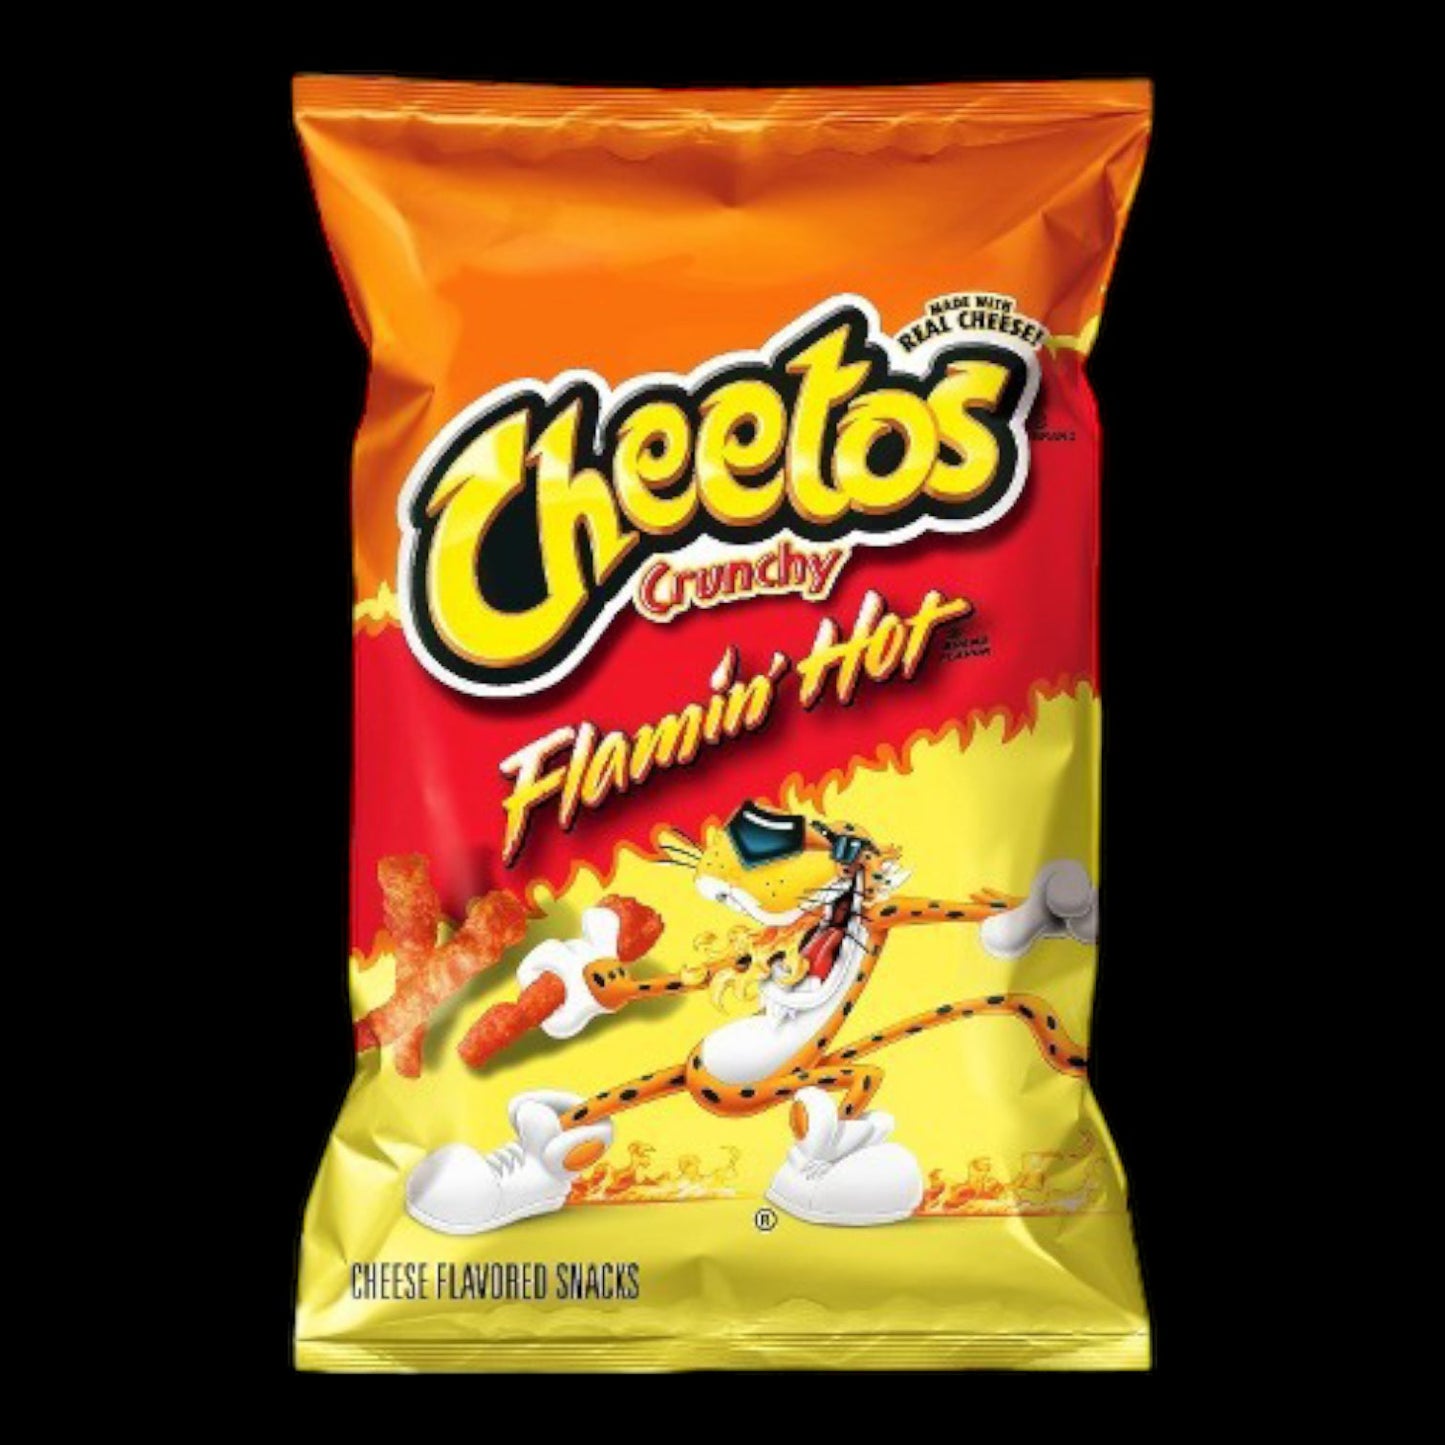 Cheetos Crunchy Flamin' Hot 99g